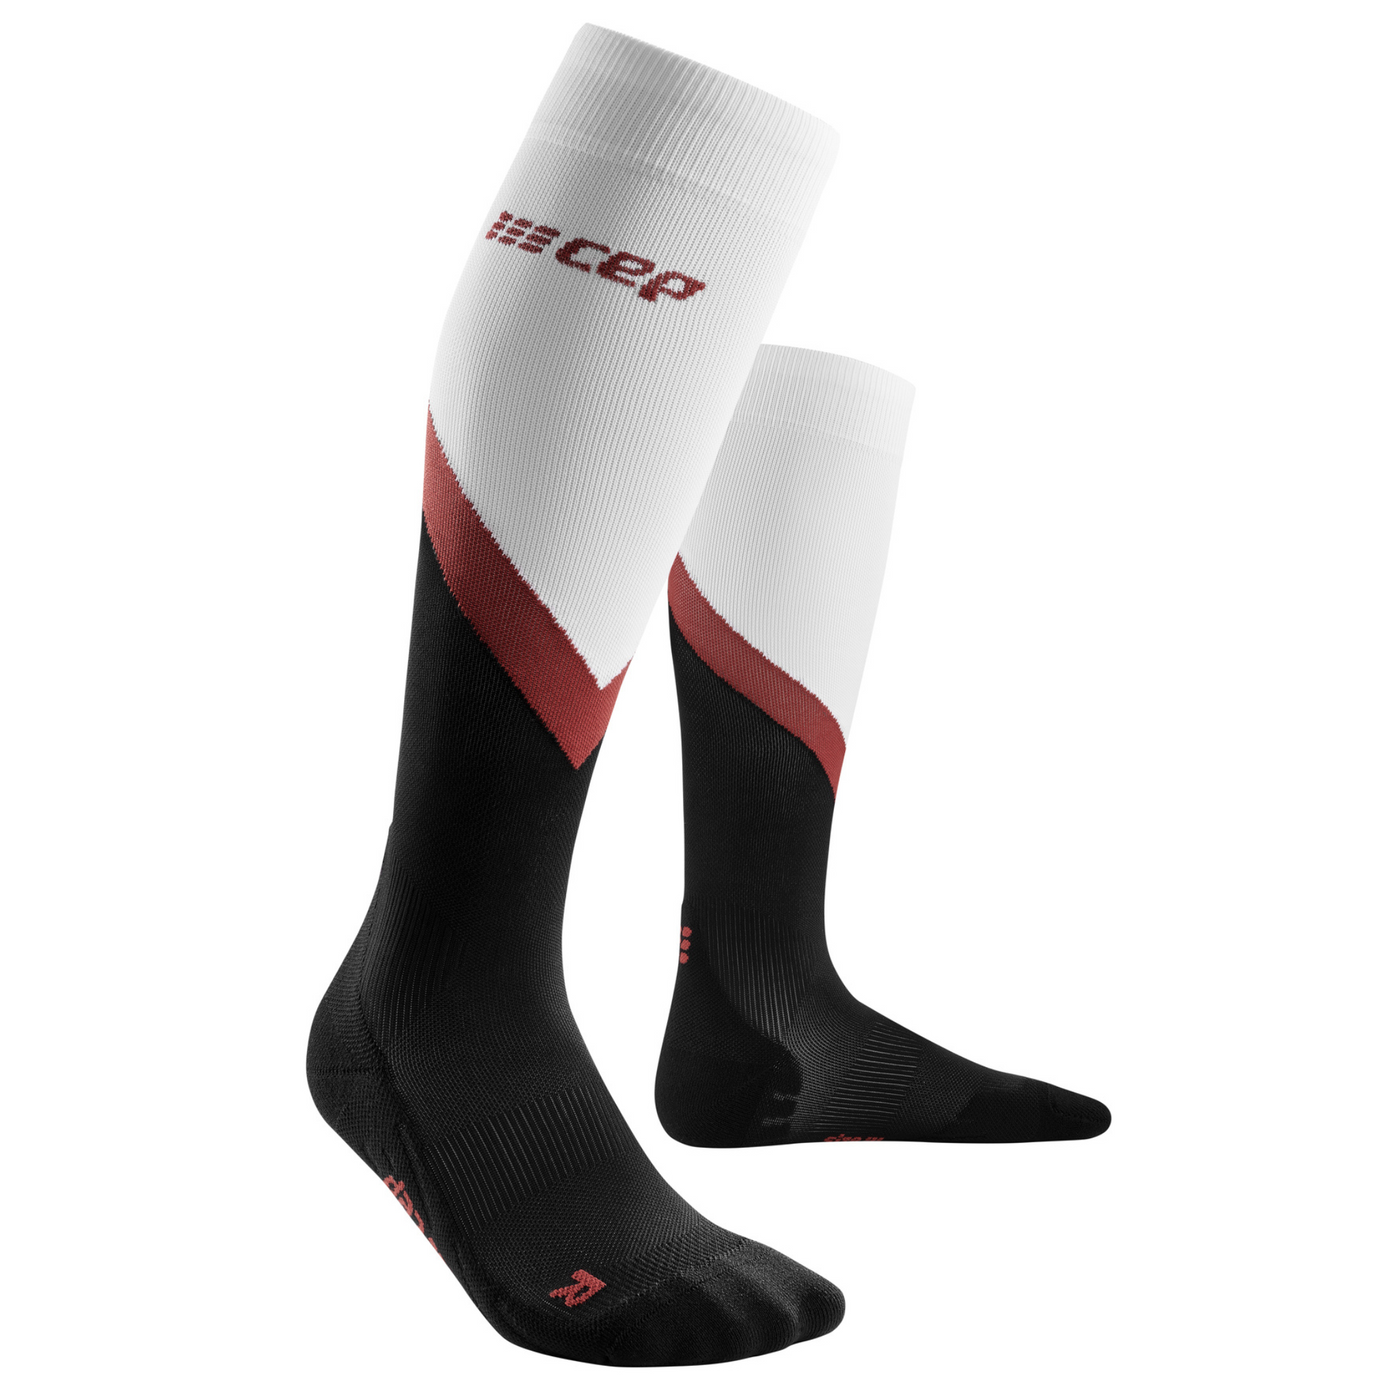 Chevron Tall Compression Socks, Men, Black/Red, Front View